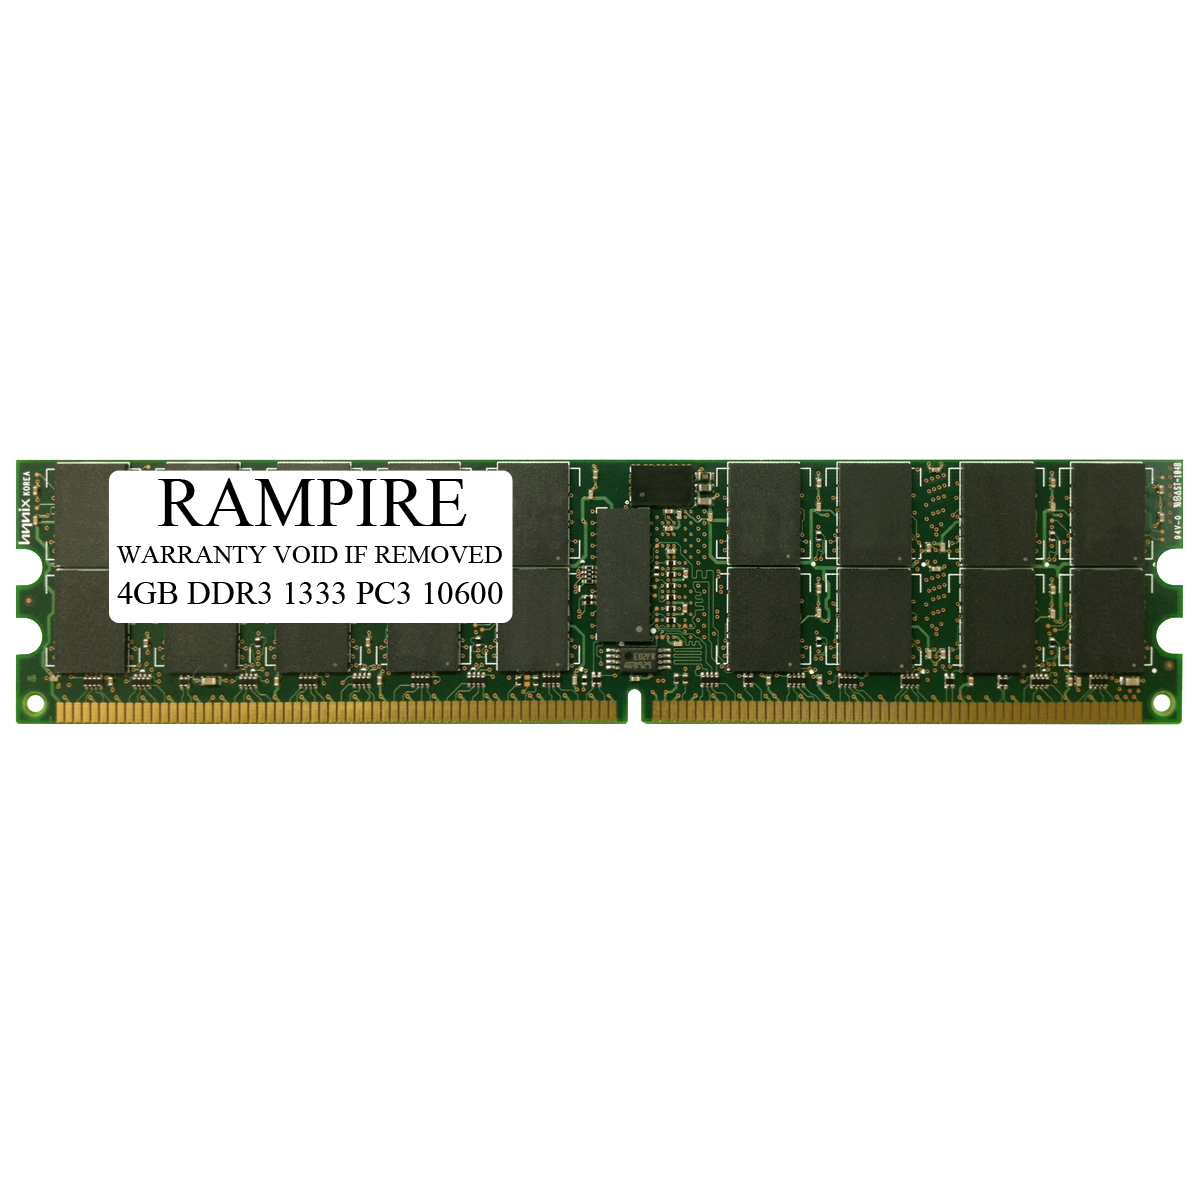 RAMPIRE 4GB DDR3 1333 (PC3 10600) 240-Pin SDRAM 2Rx4 Standard Profile 1.35V ECC Registered Server Memory